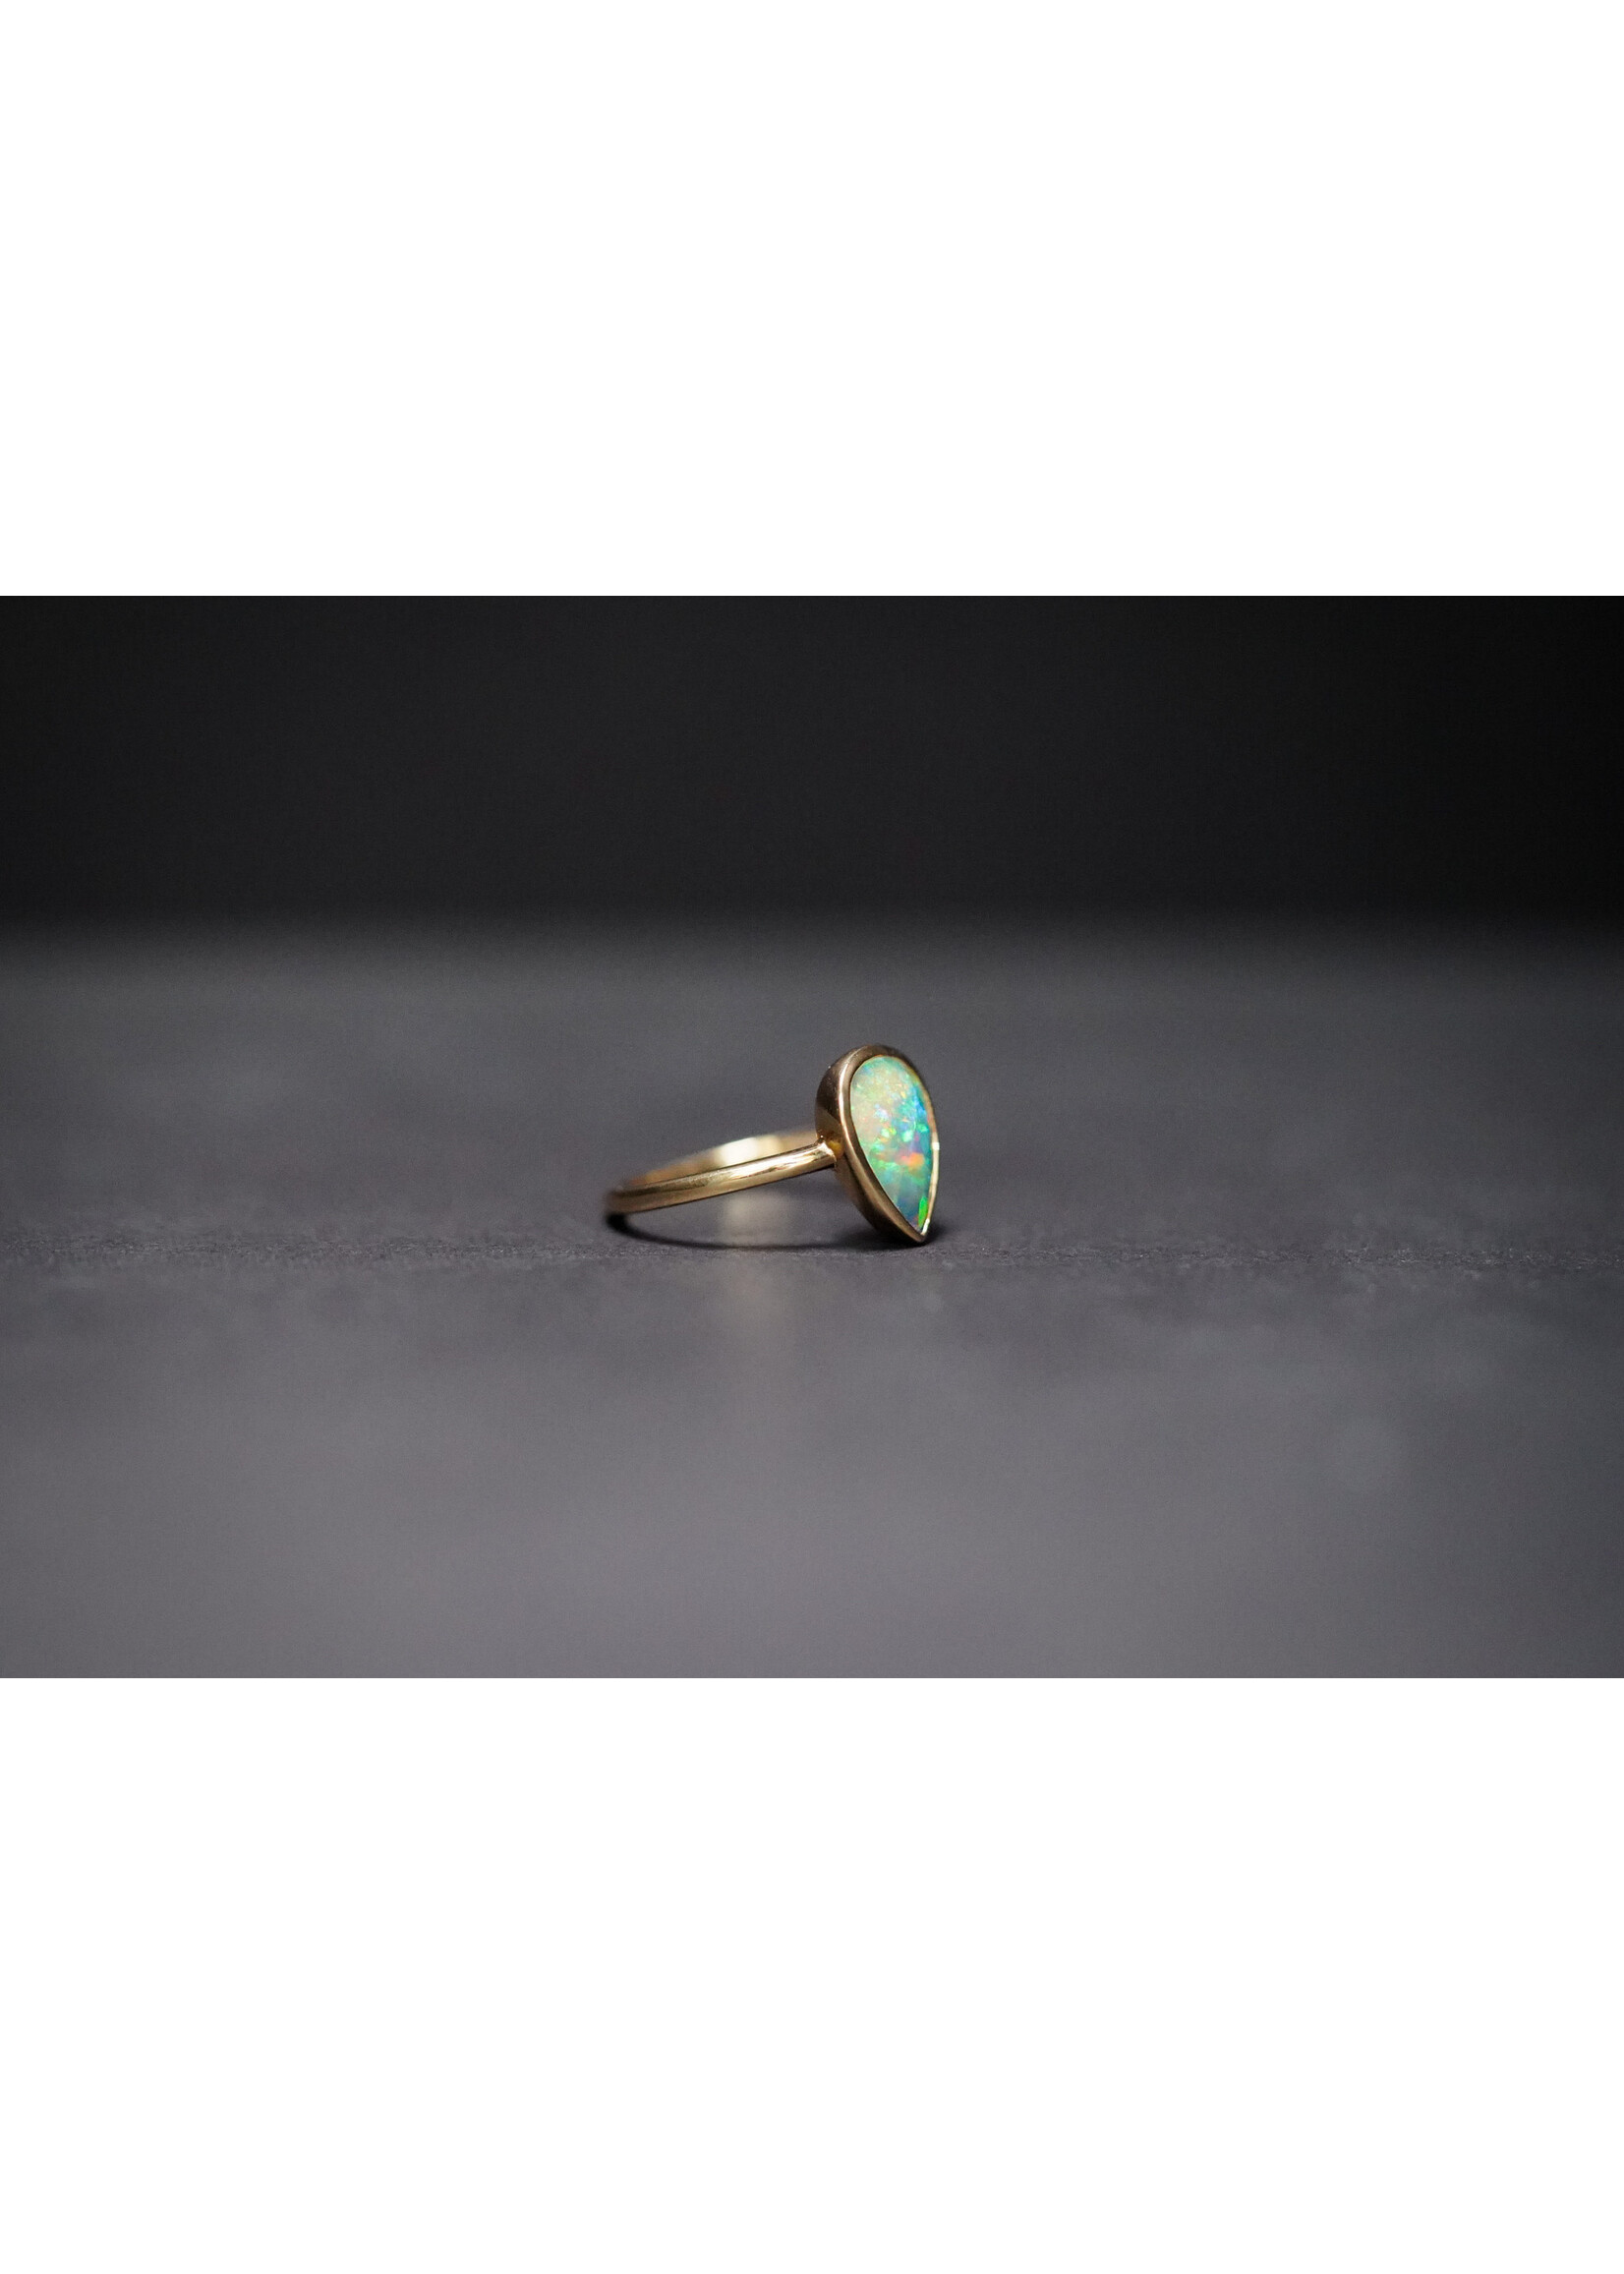 14KY 2.8g .97ct Opal Bezel Ring (size 6.5)